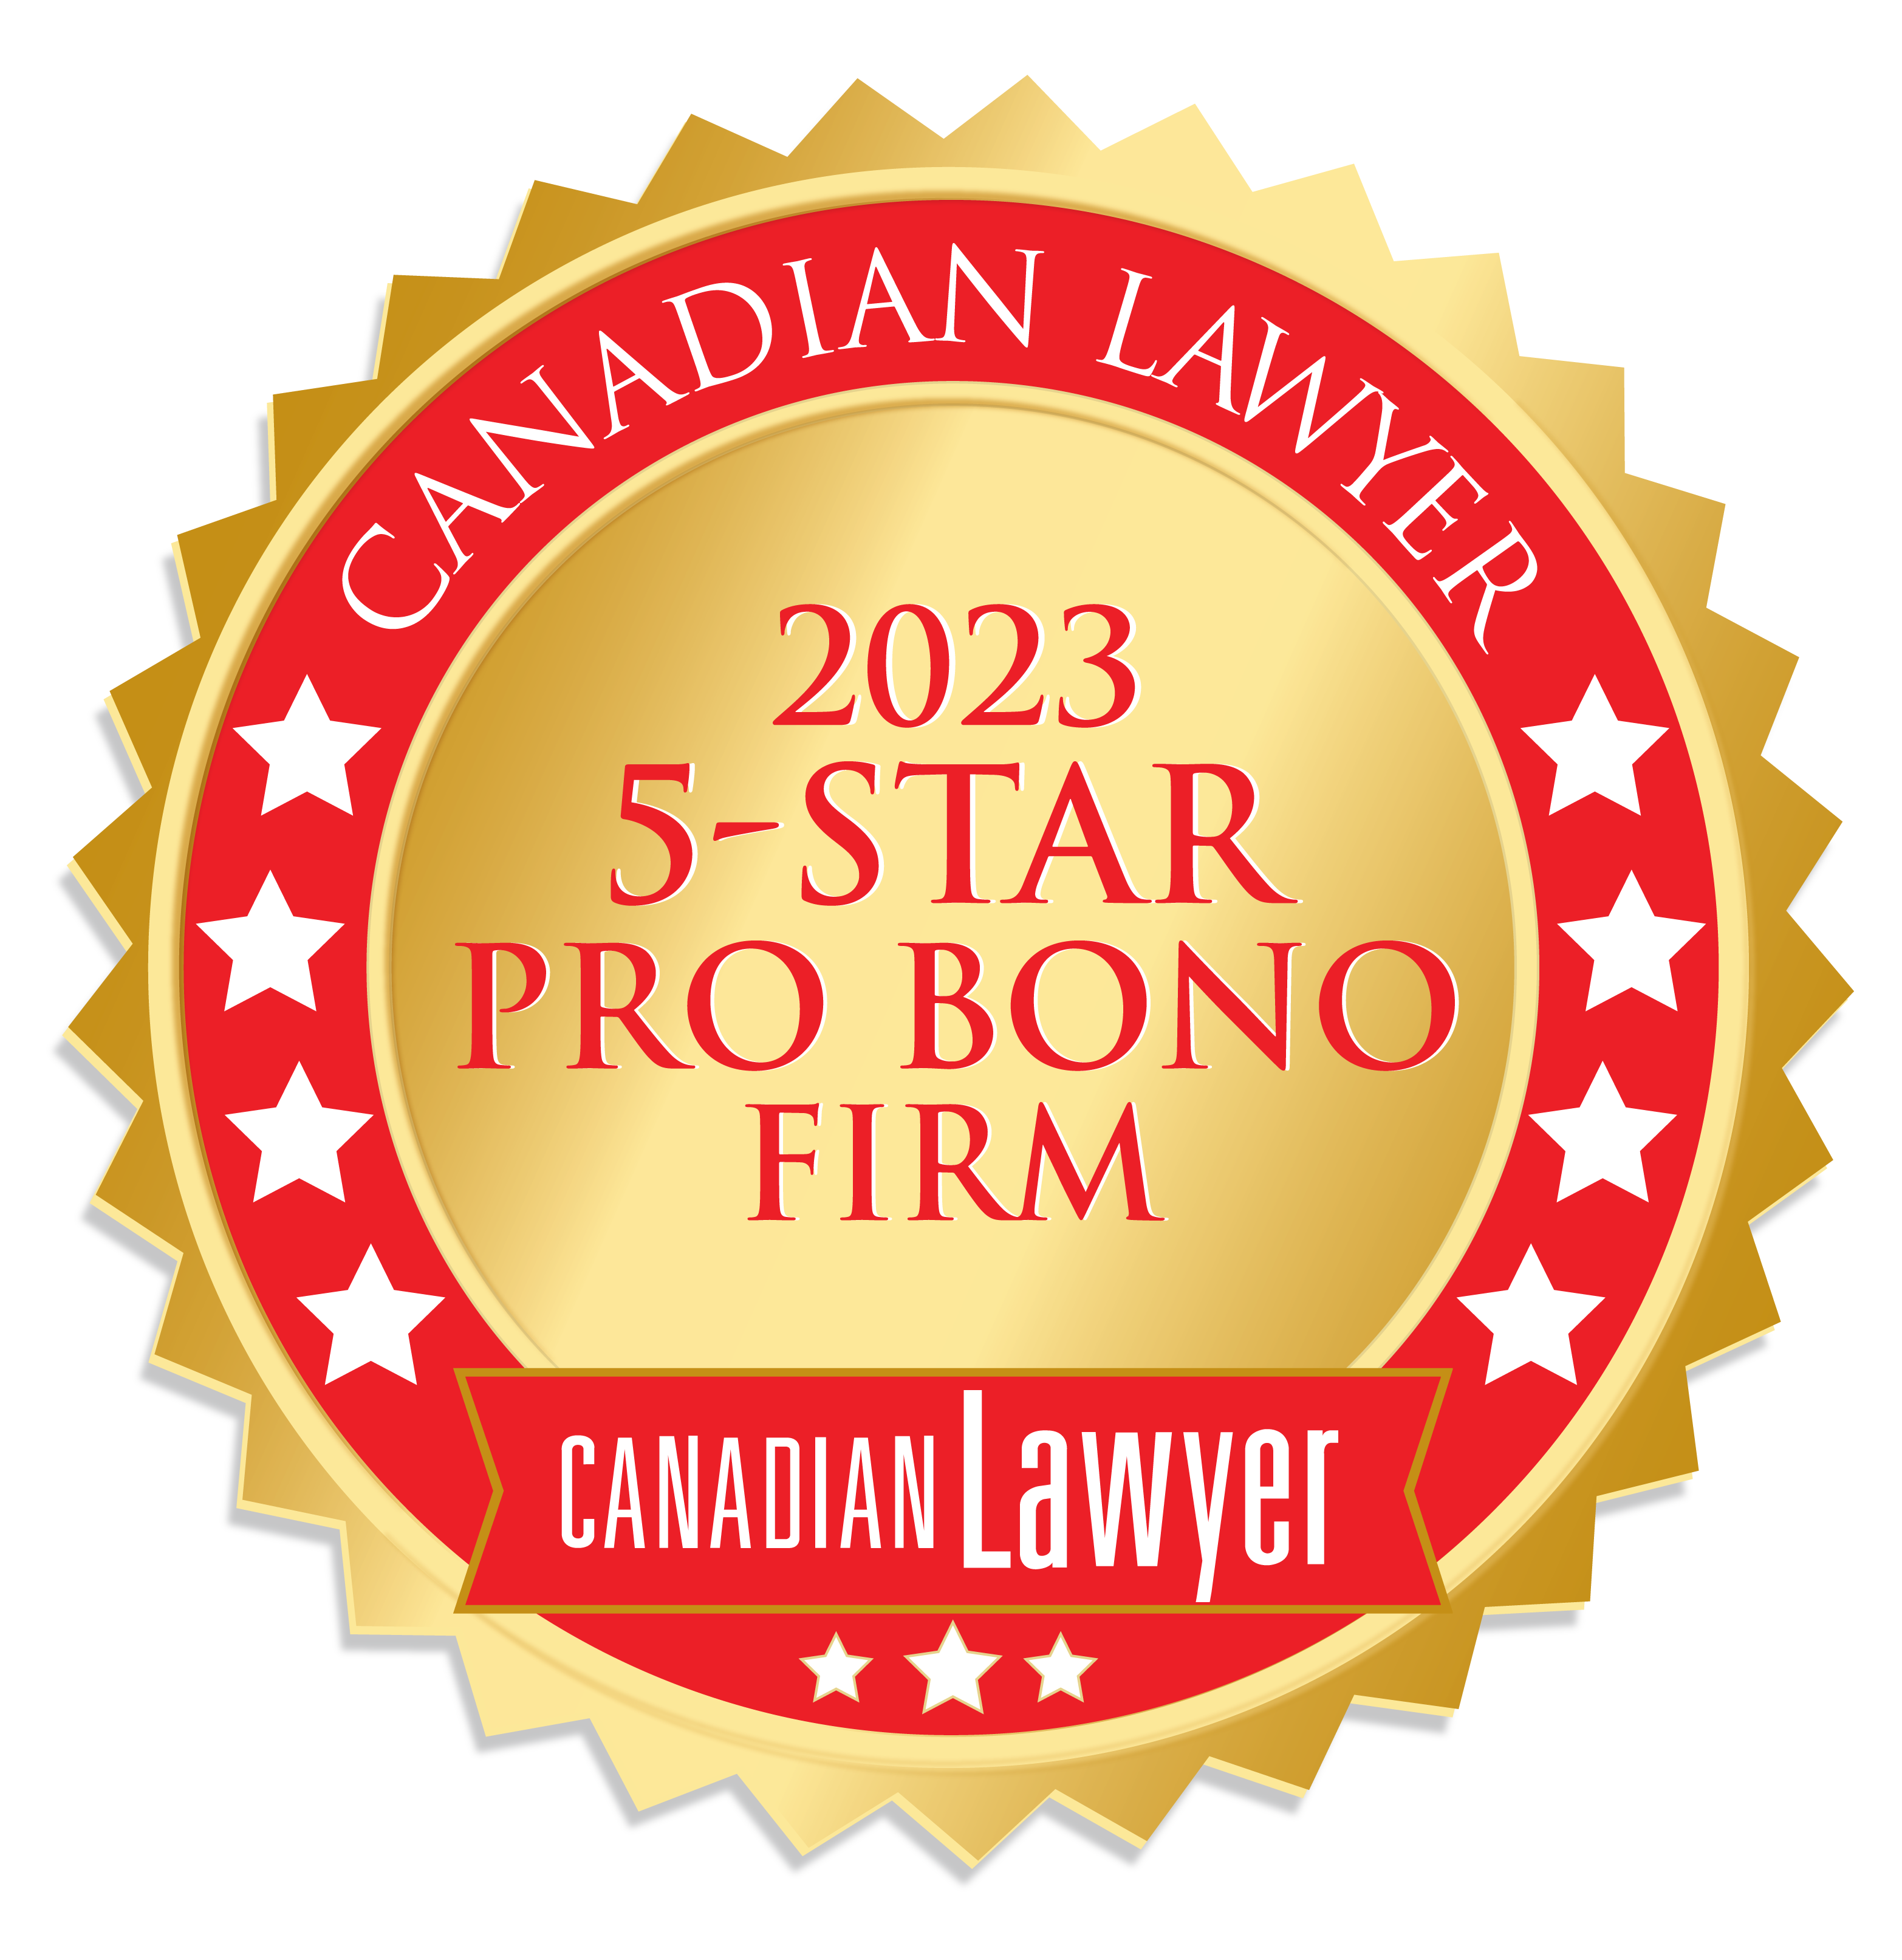 Canadian Lawyer 5-star Pro Bono Firms